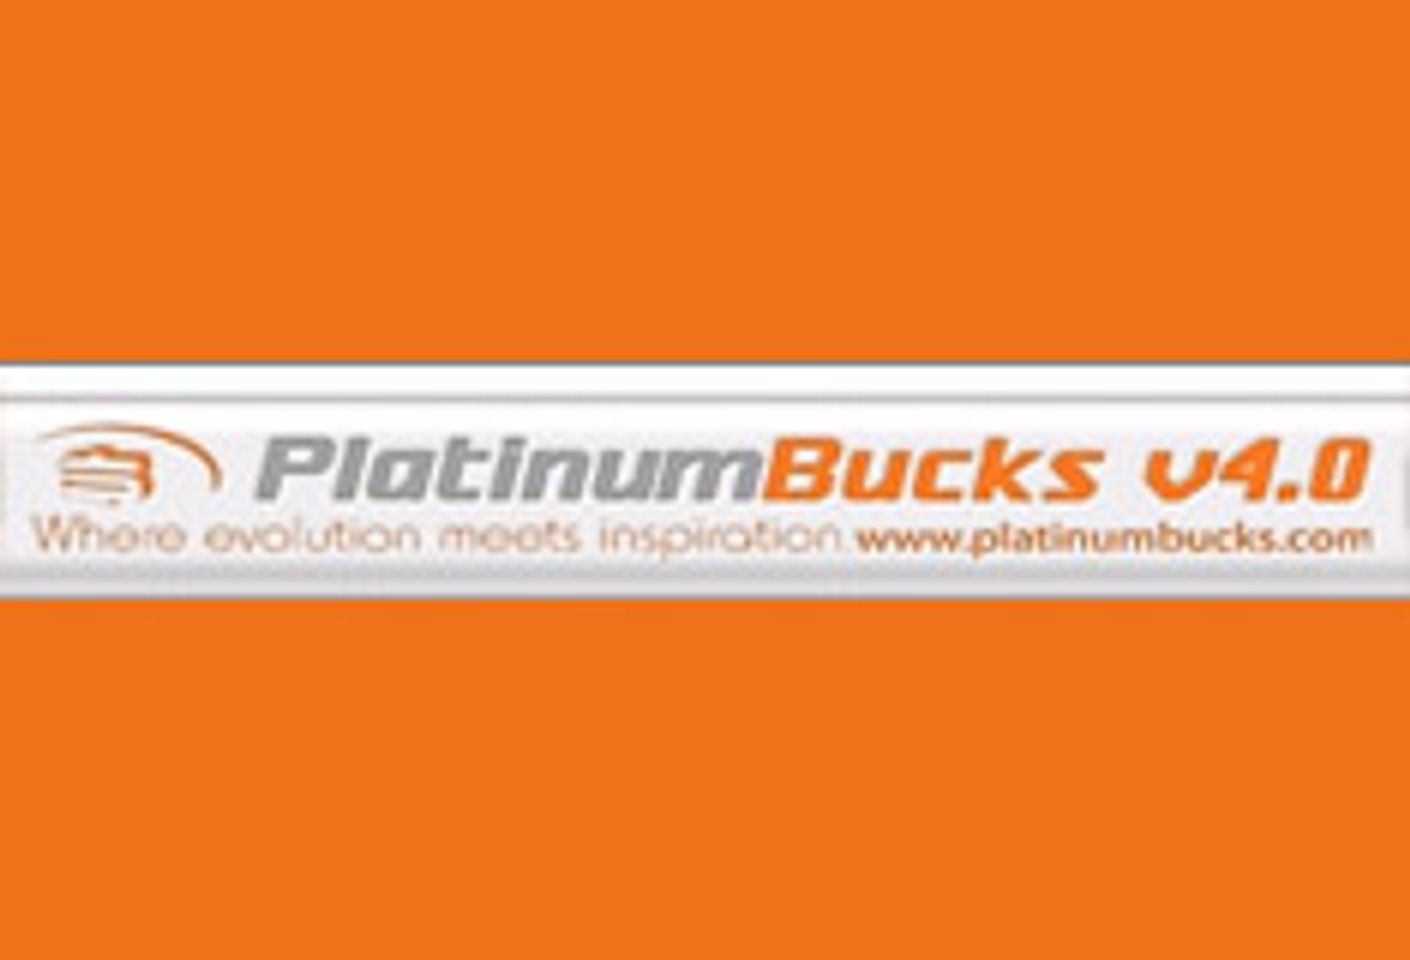 Platinum Bucks Launches Seven New Sites, New Promotion